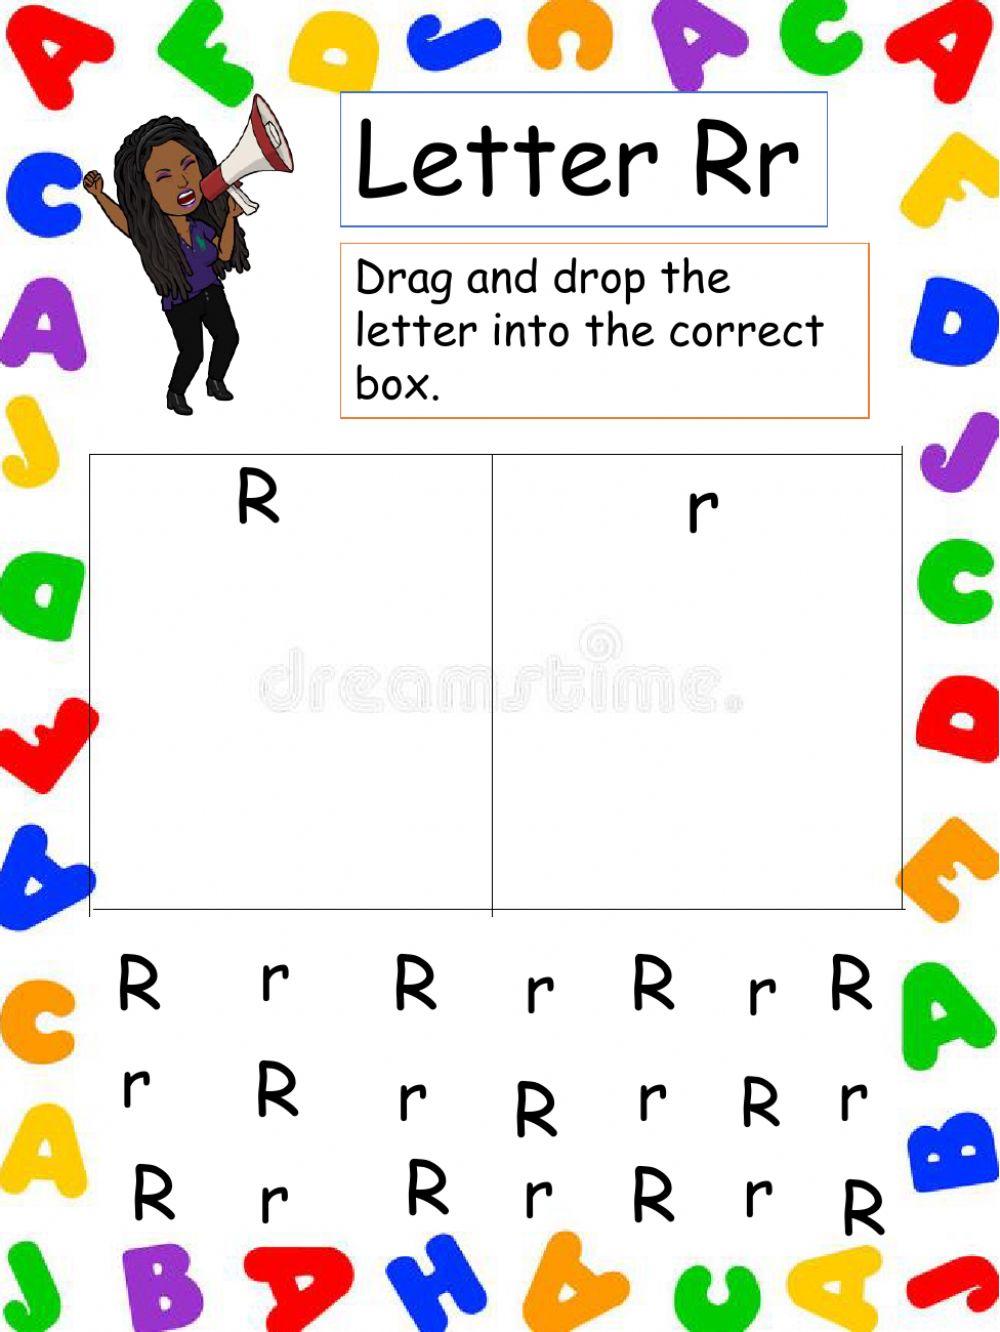 Letter Rr